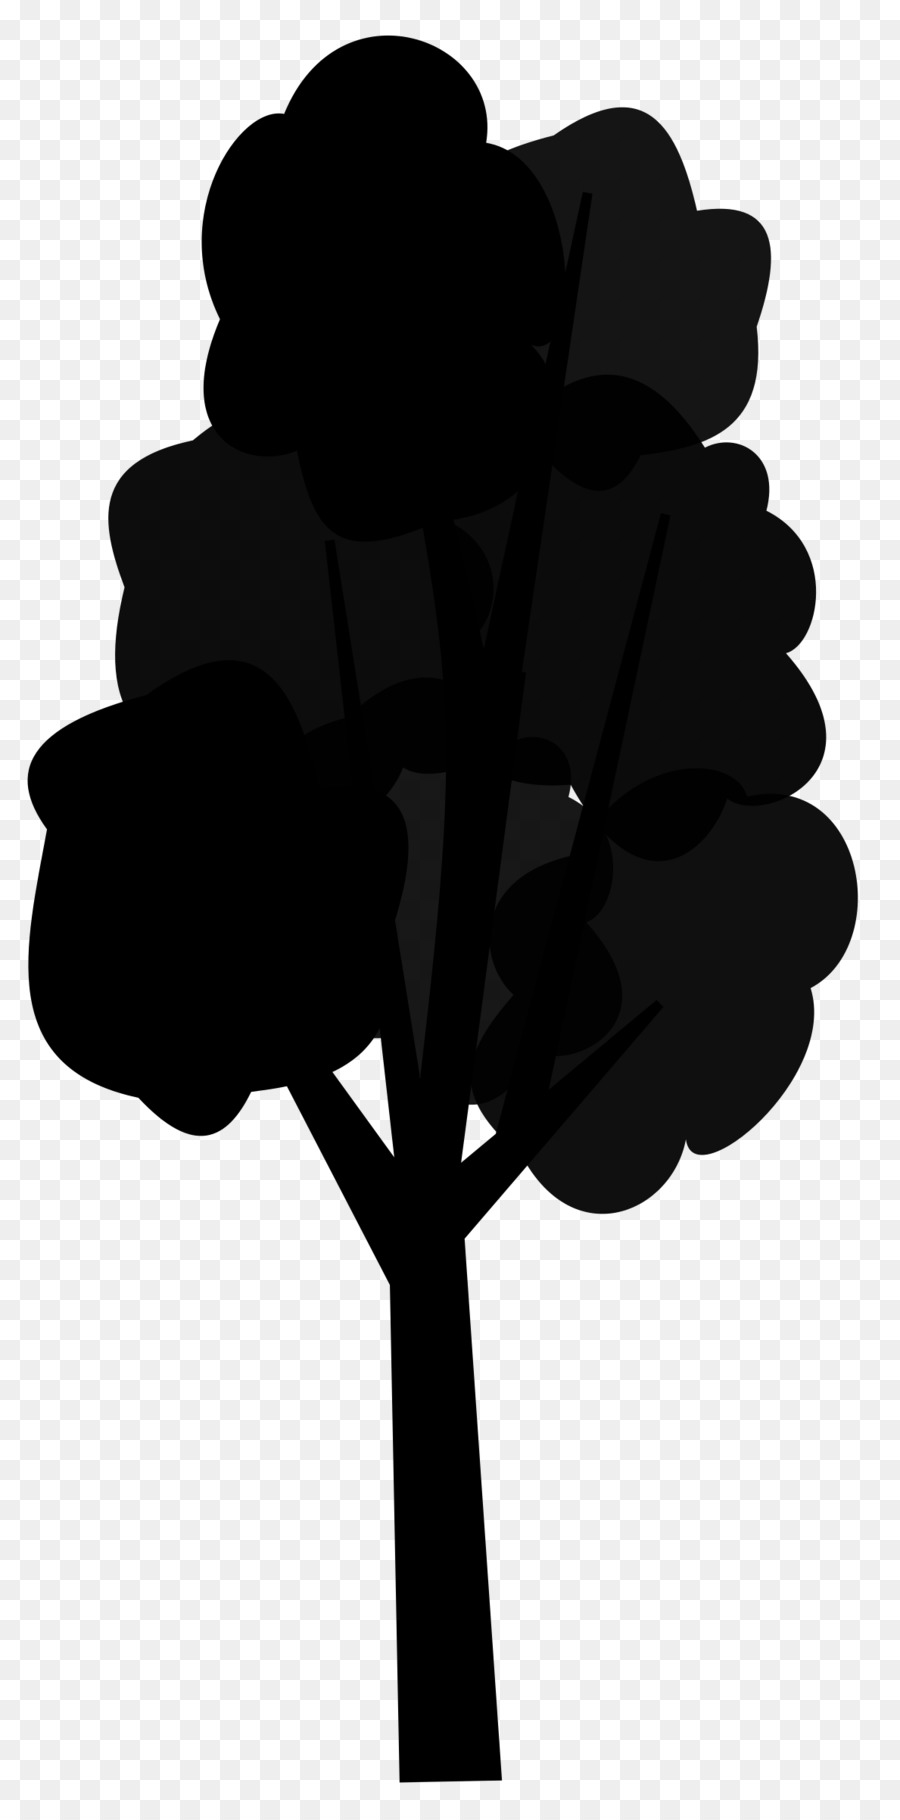 Black & White - M Leaf Silhouette Font Tree -  png download - 1189*2400 - Free Transparent Black  White  M png Download.